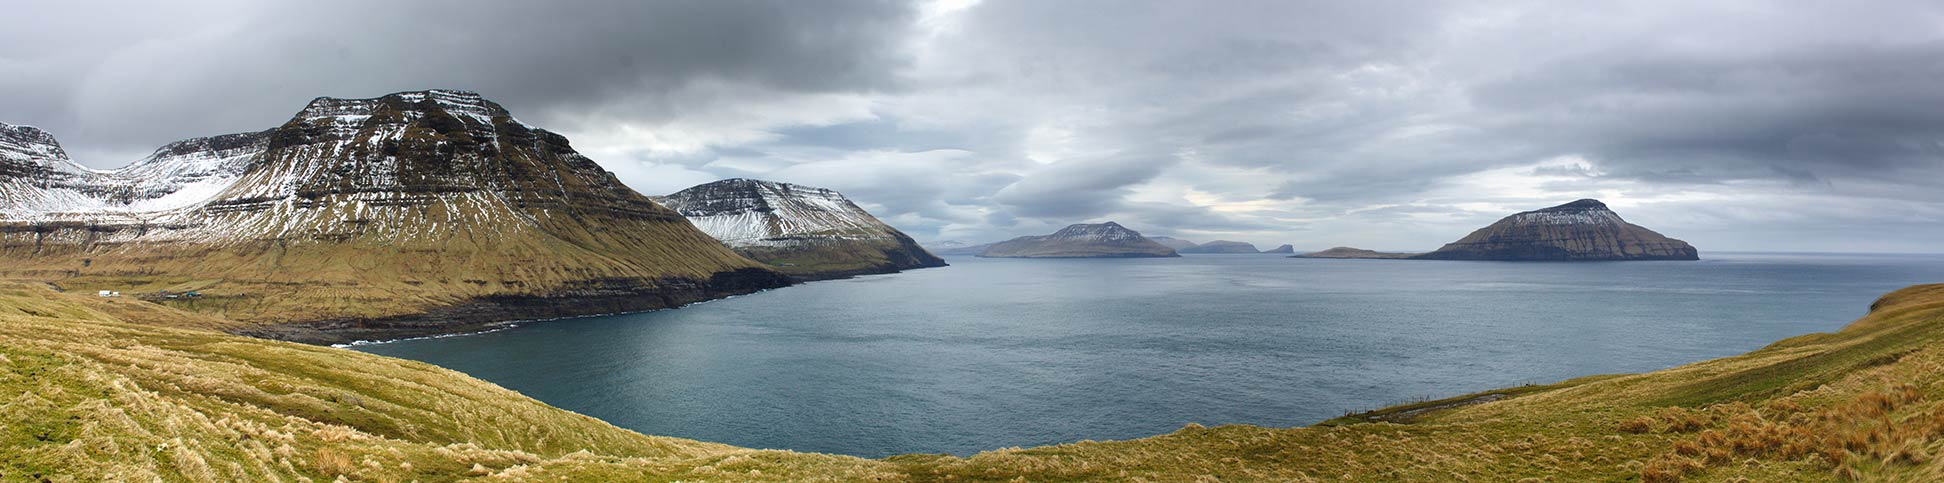 Faroe Islands panorama view from from Norðradalur, Streymoy island